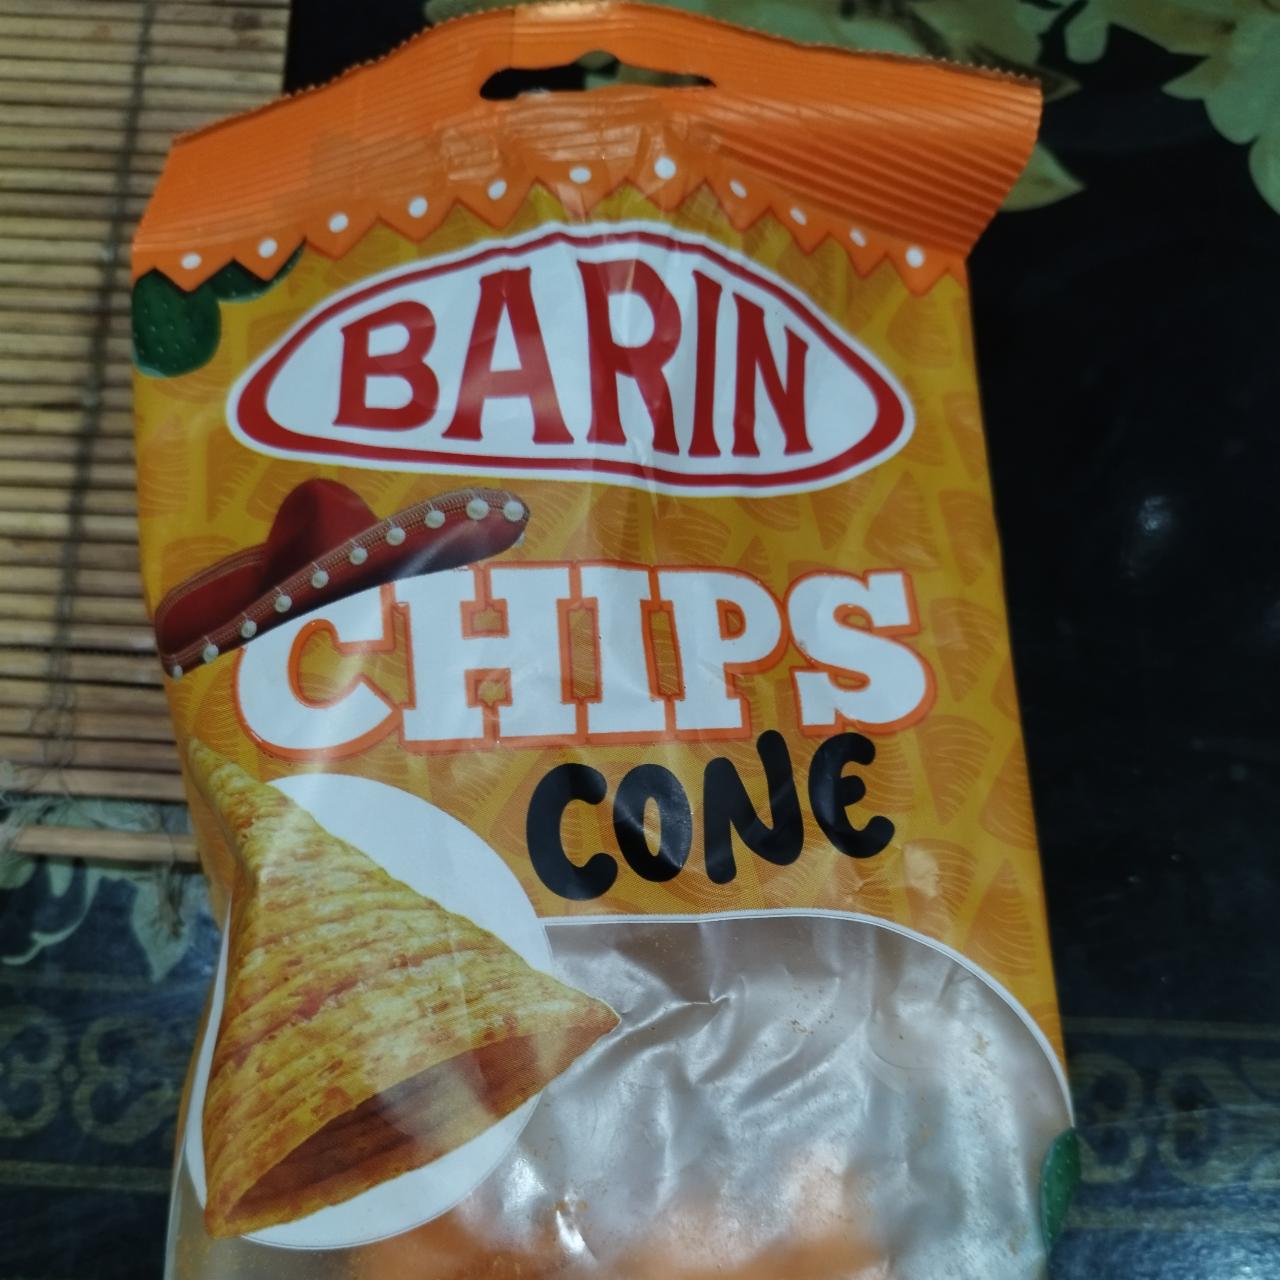 Фото - чипсы рожки кукурузные Chips cone Barin